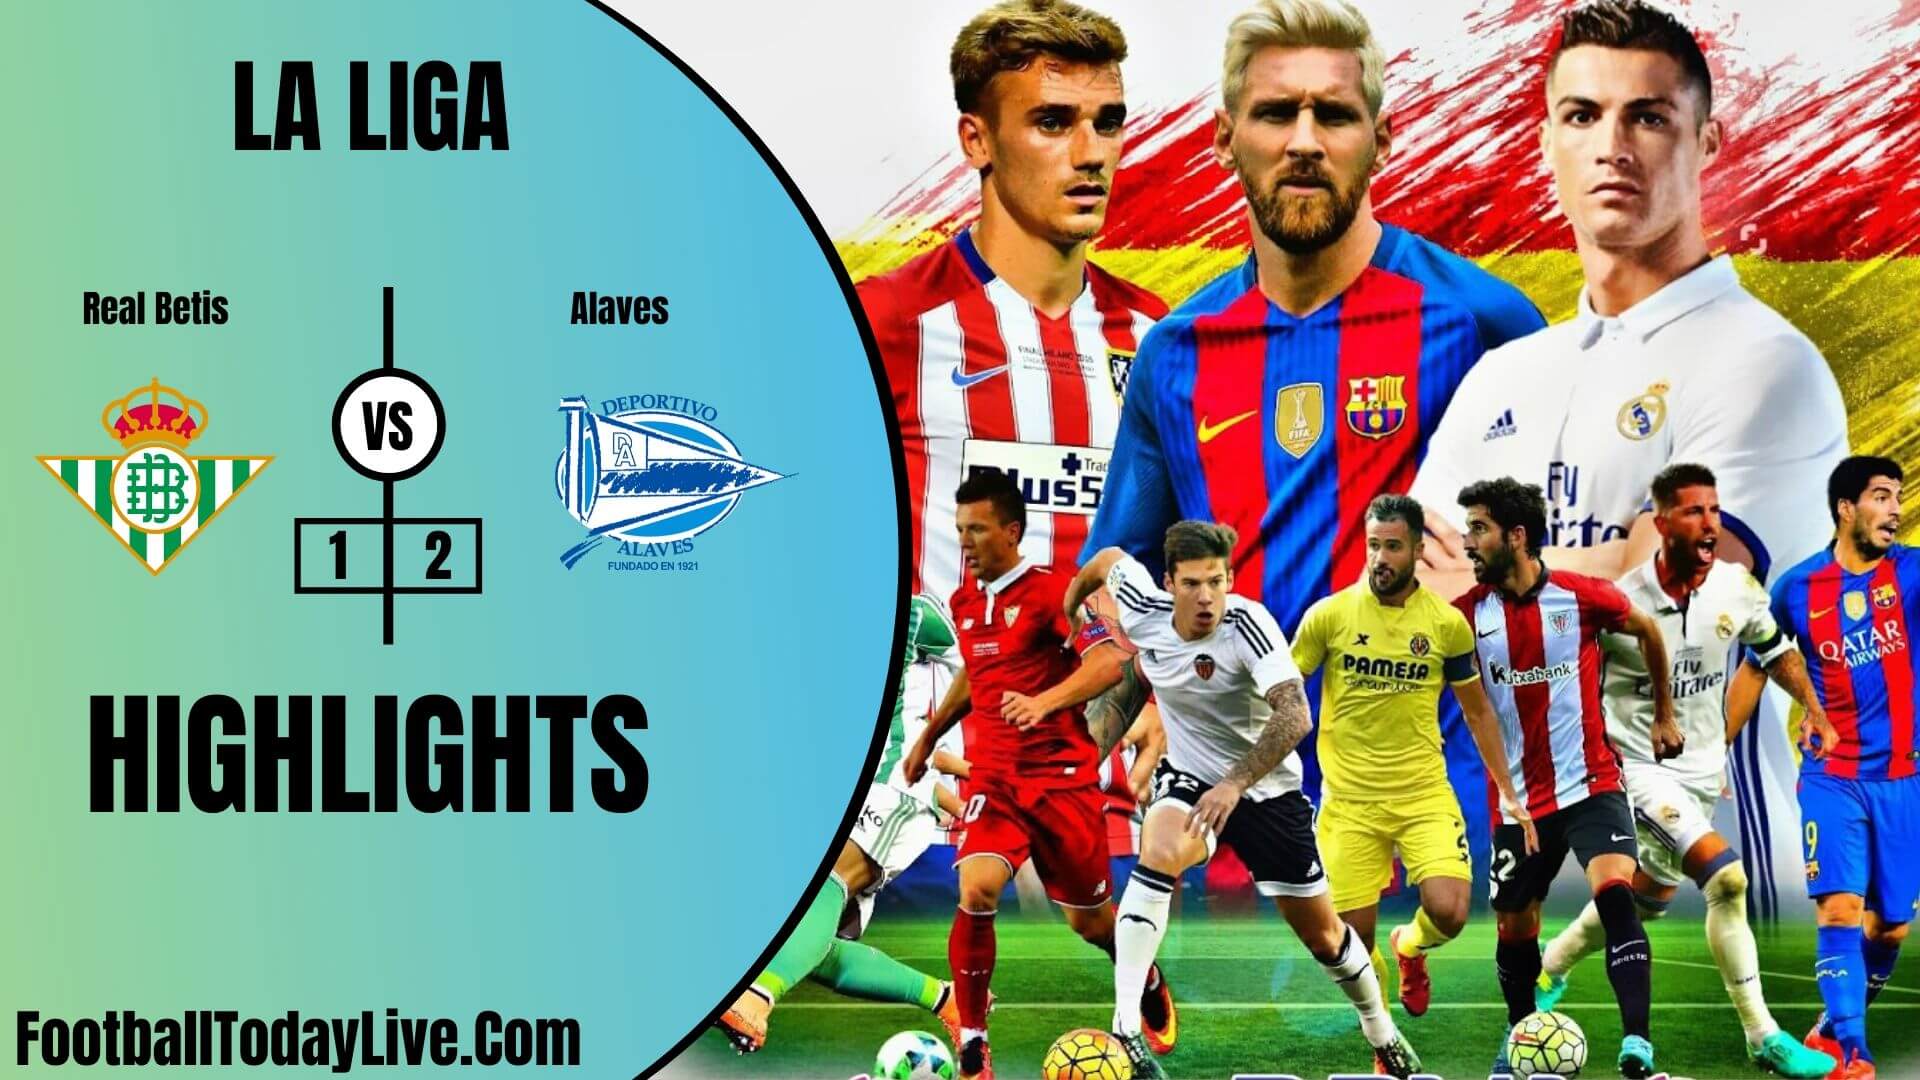 Real Betis Vs Alaves Highlights 2020 La Liga Week 37